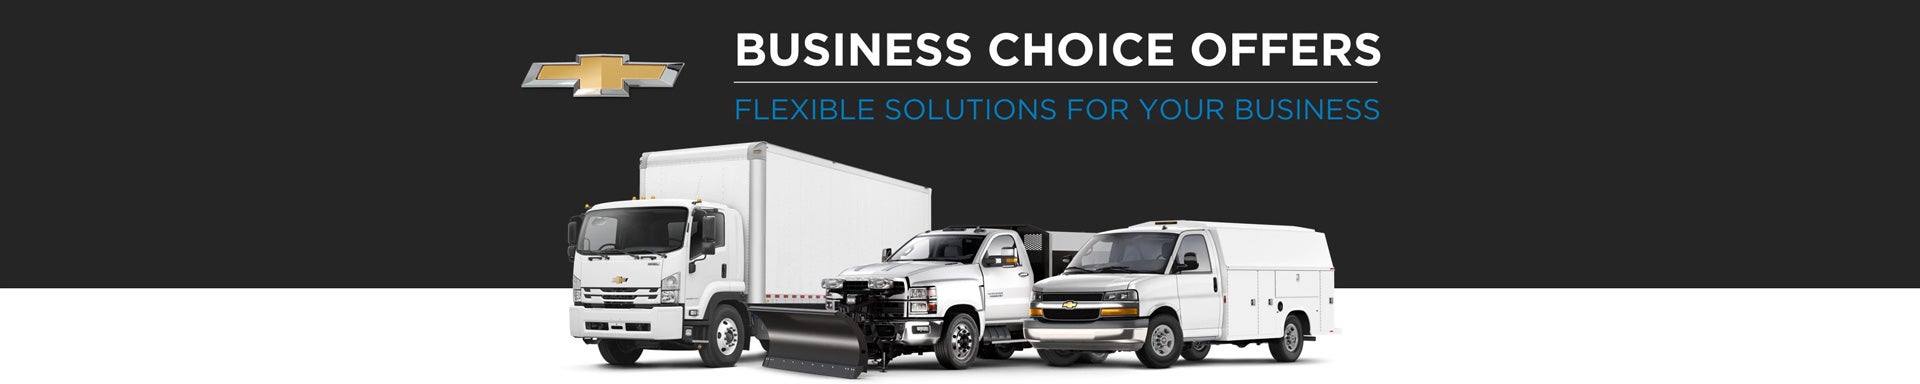 Chevrolet Business Choice Offers - Flexible Solutions for your Business - Koons White Marsh Chevrolet in White Marsh MD